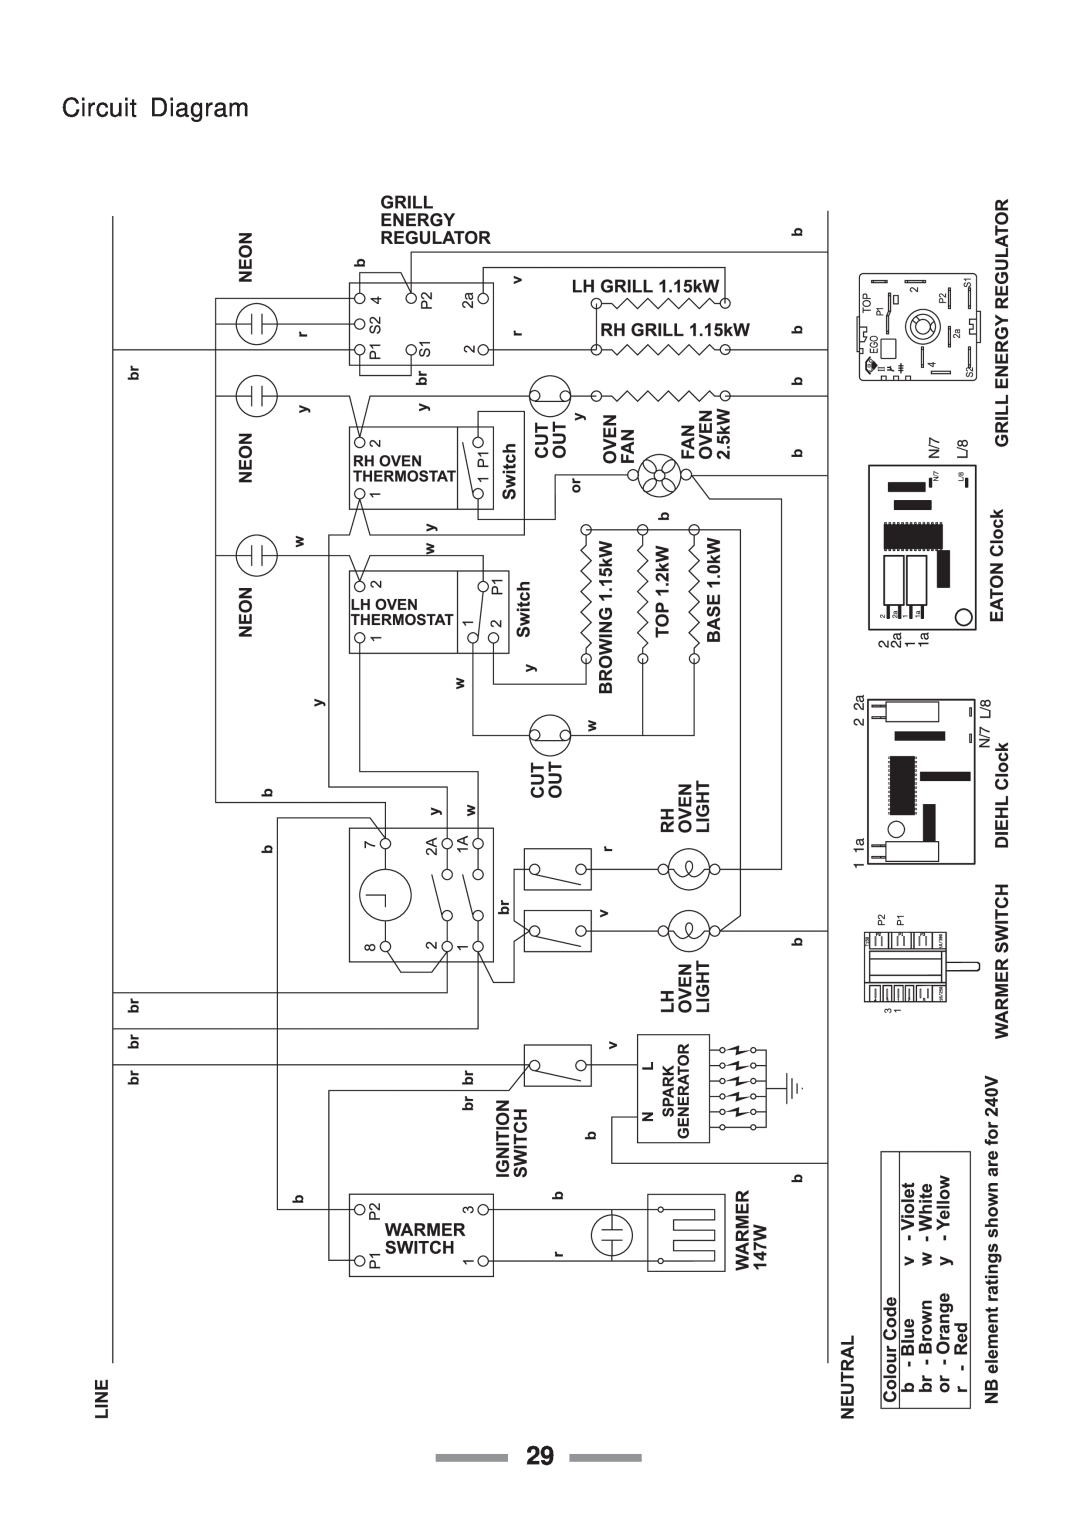 Rangemaster 110 installation instructions Circuit Diagram 